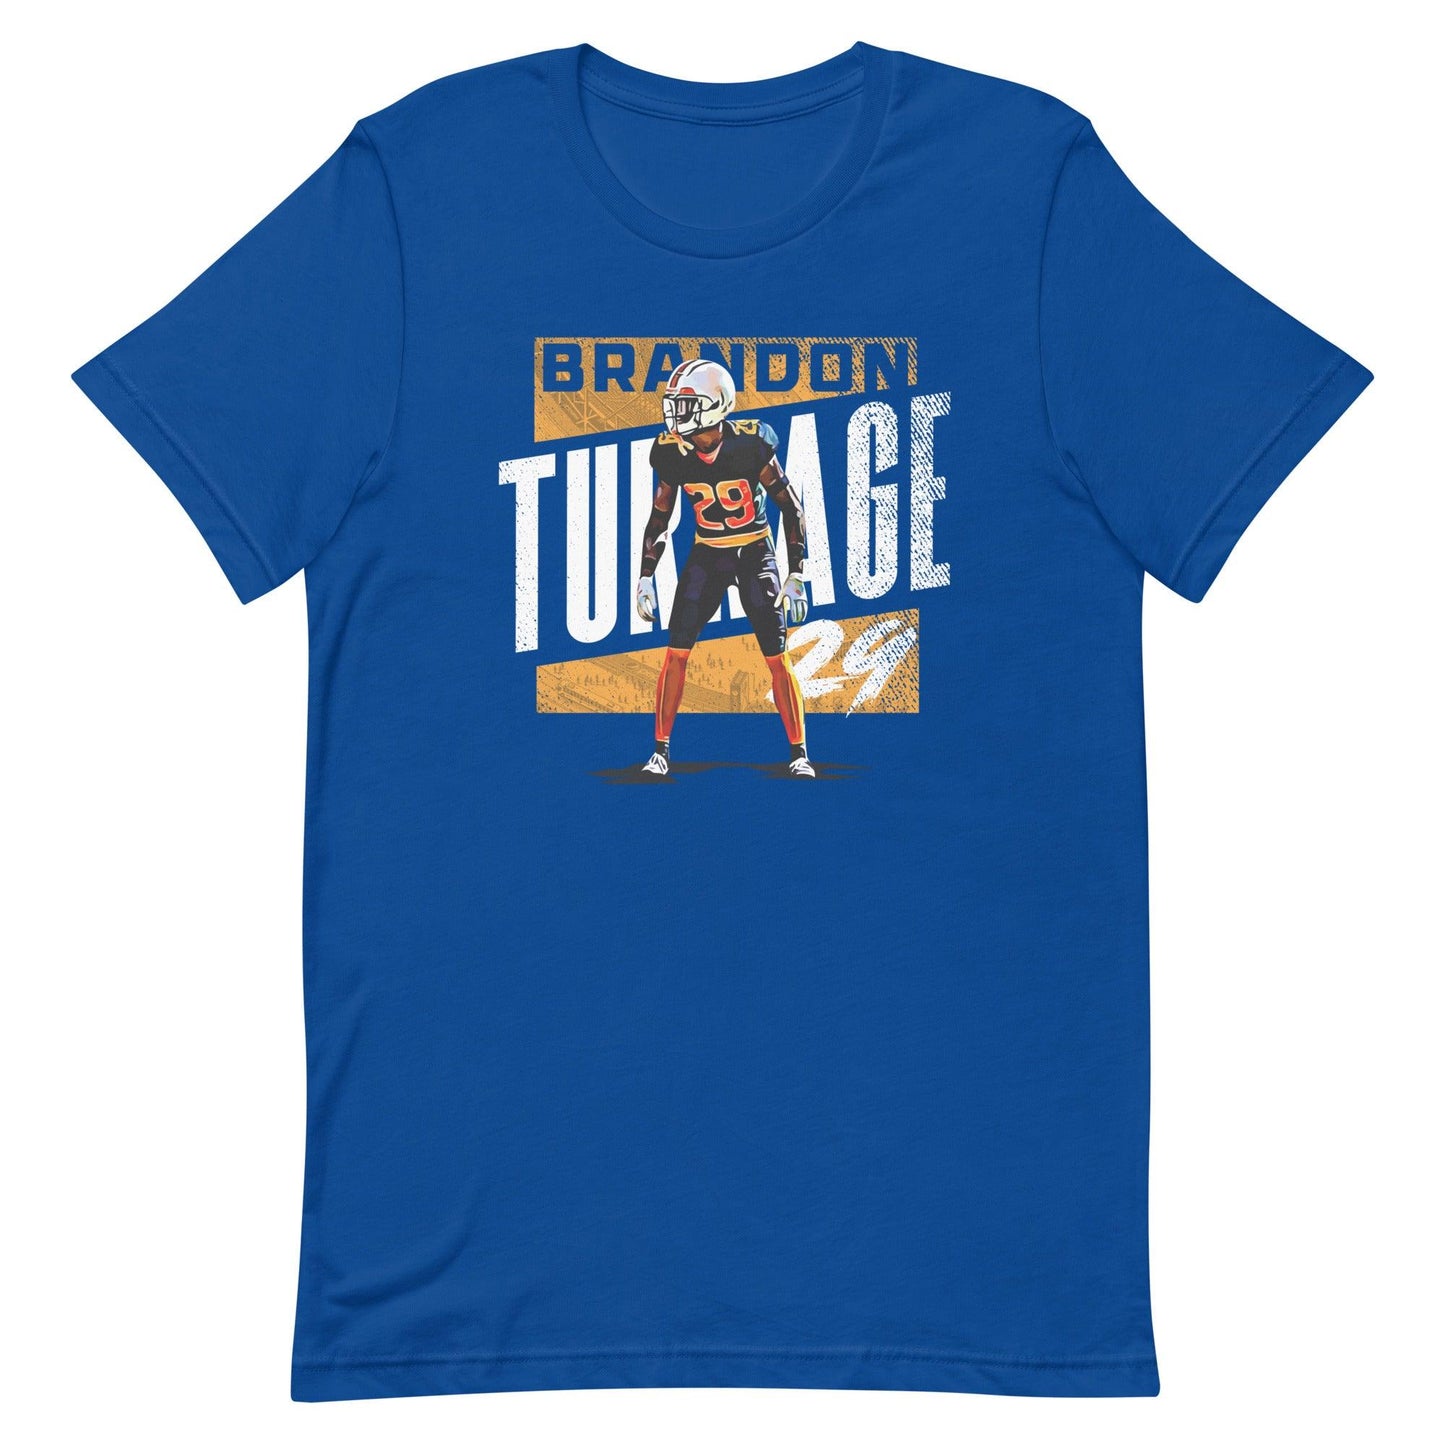 Brandon Turnage "29" t-shirt - Fan Arch